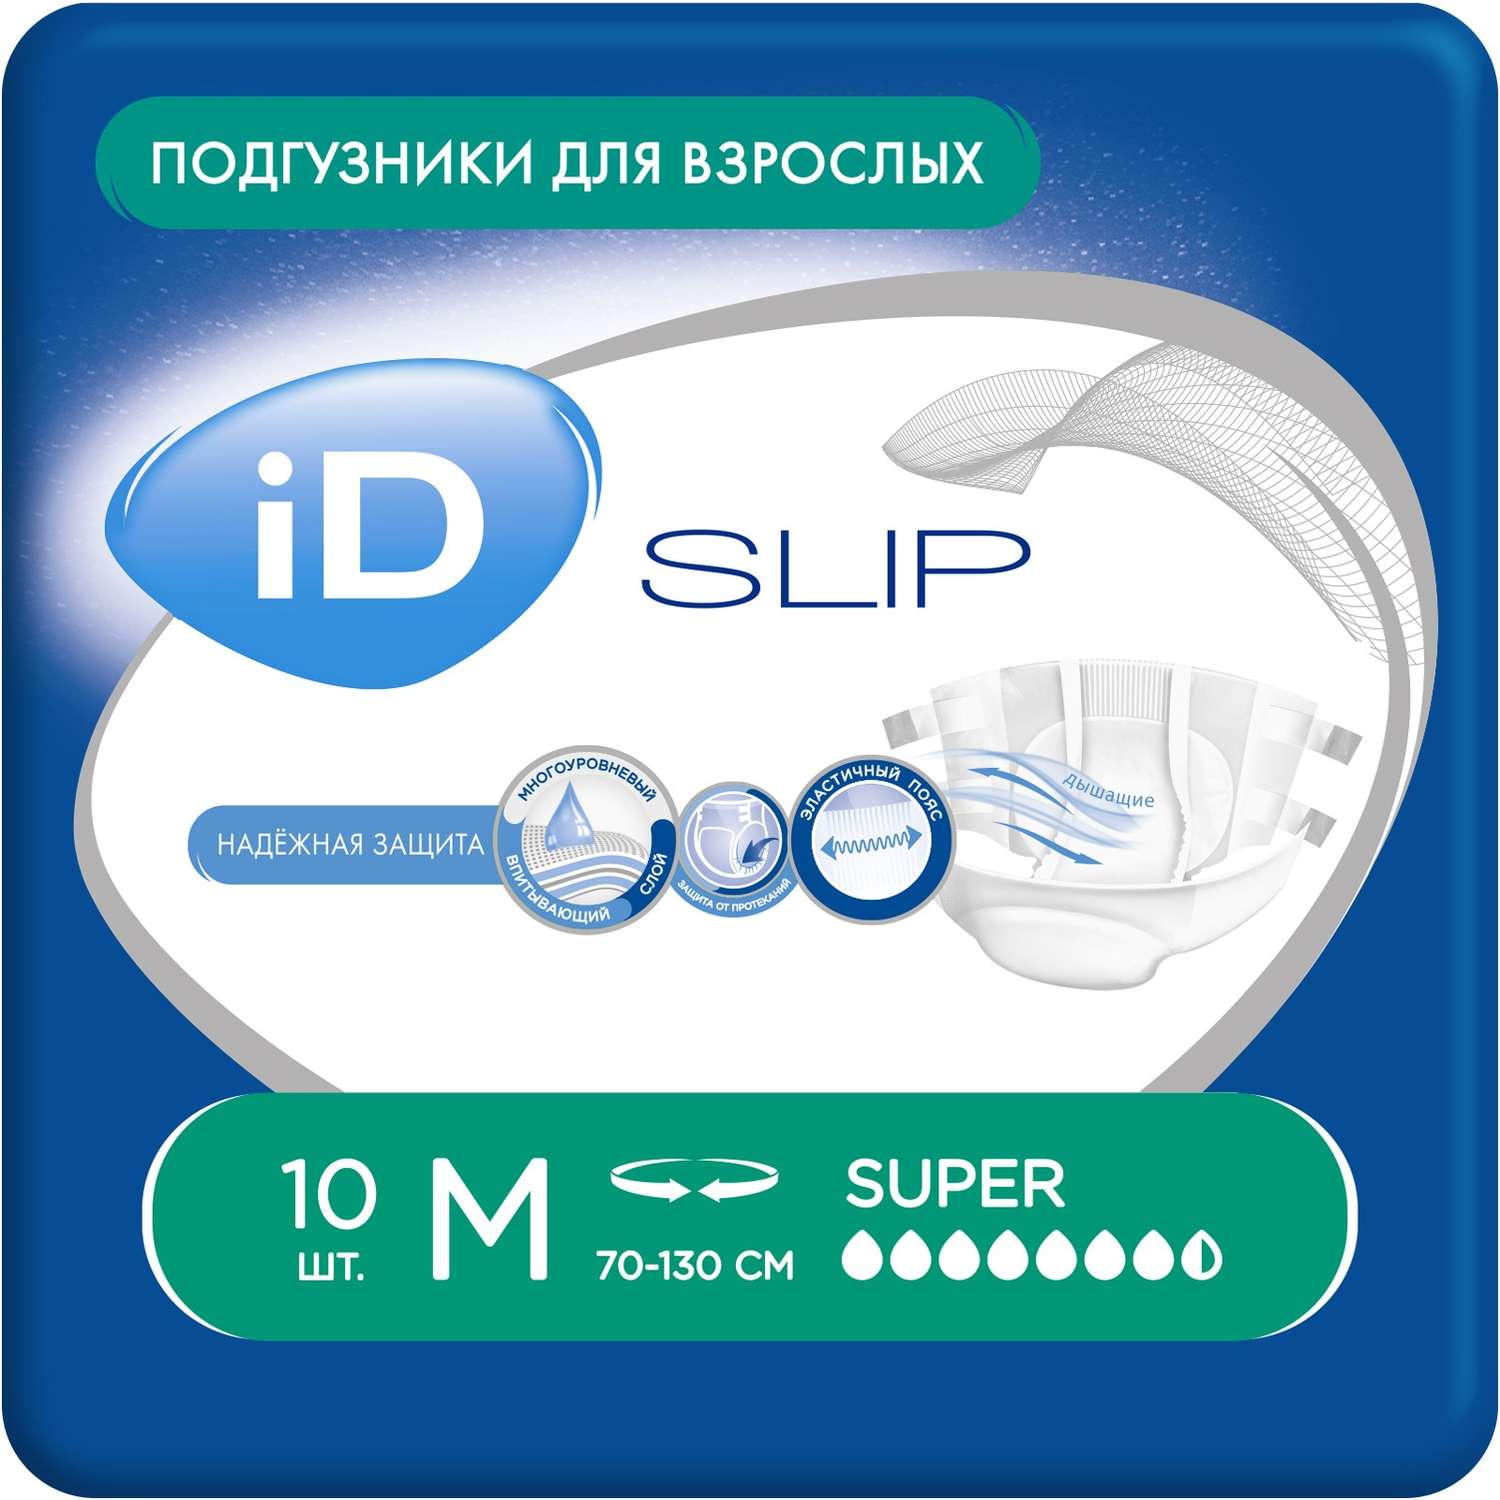 Подгузники для взрослых iD SLIP M 10 шт. - фото 1